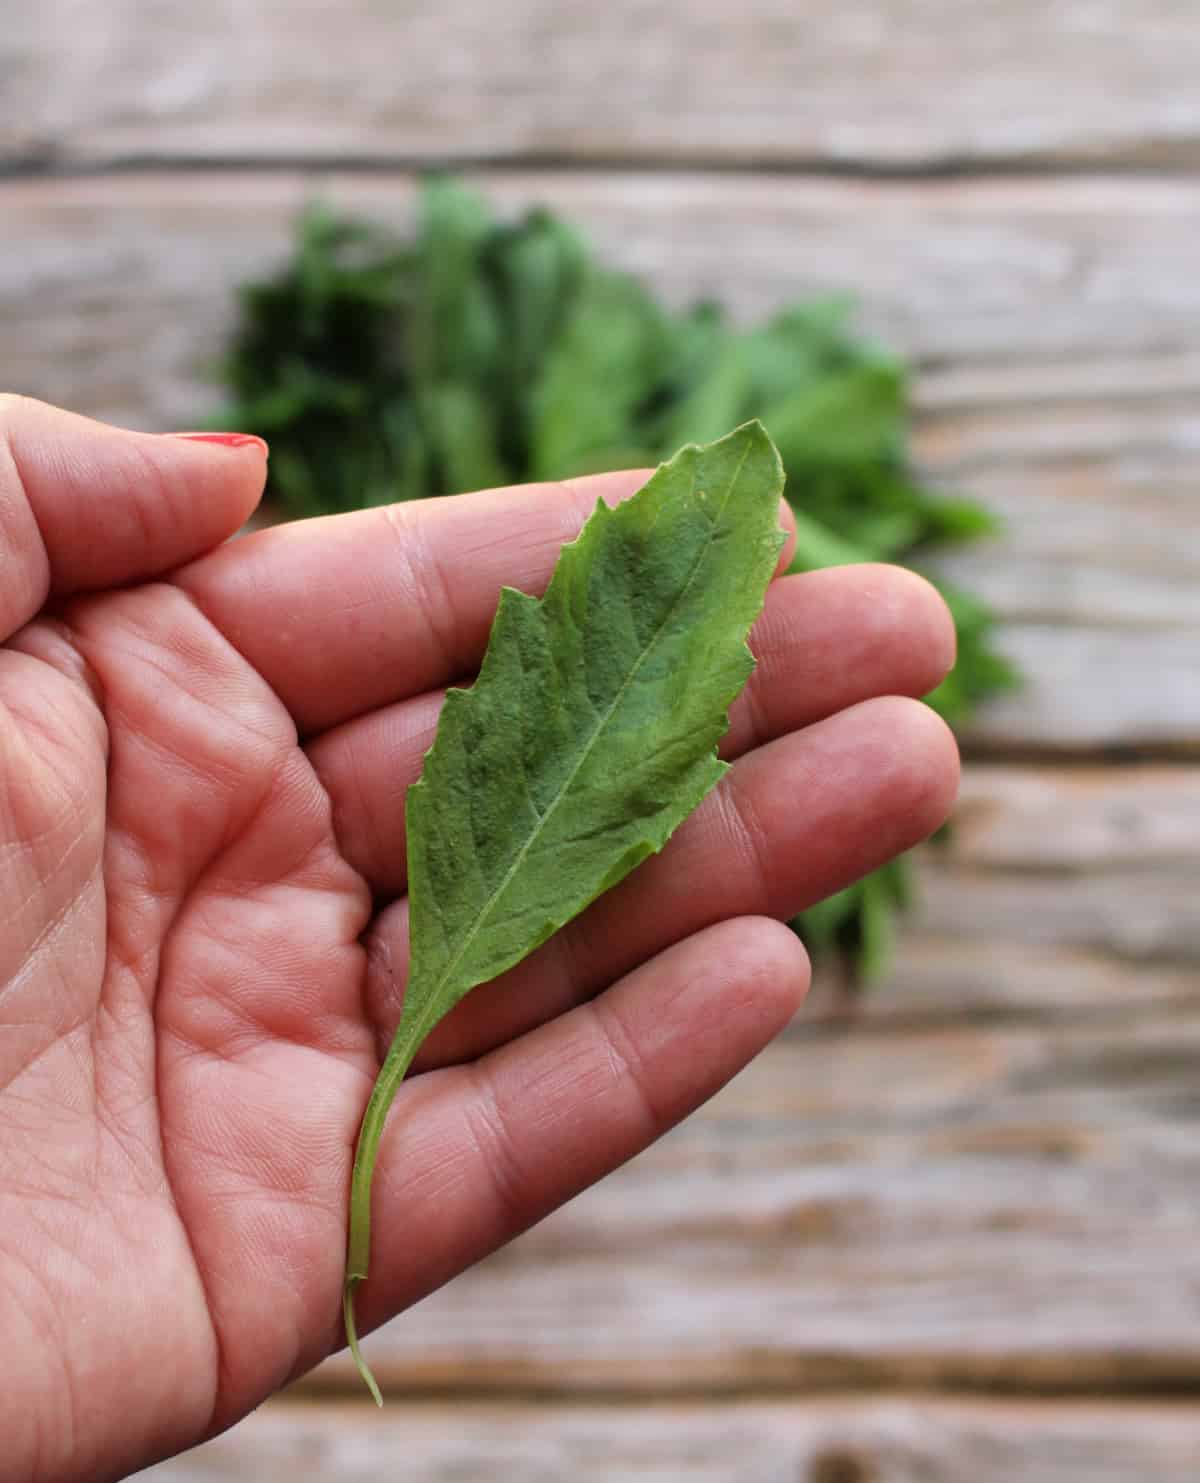 A hand holding a fresh, green epazote leaf.